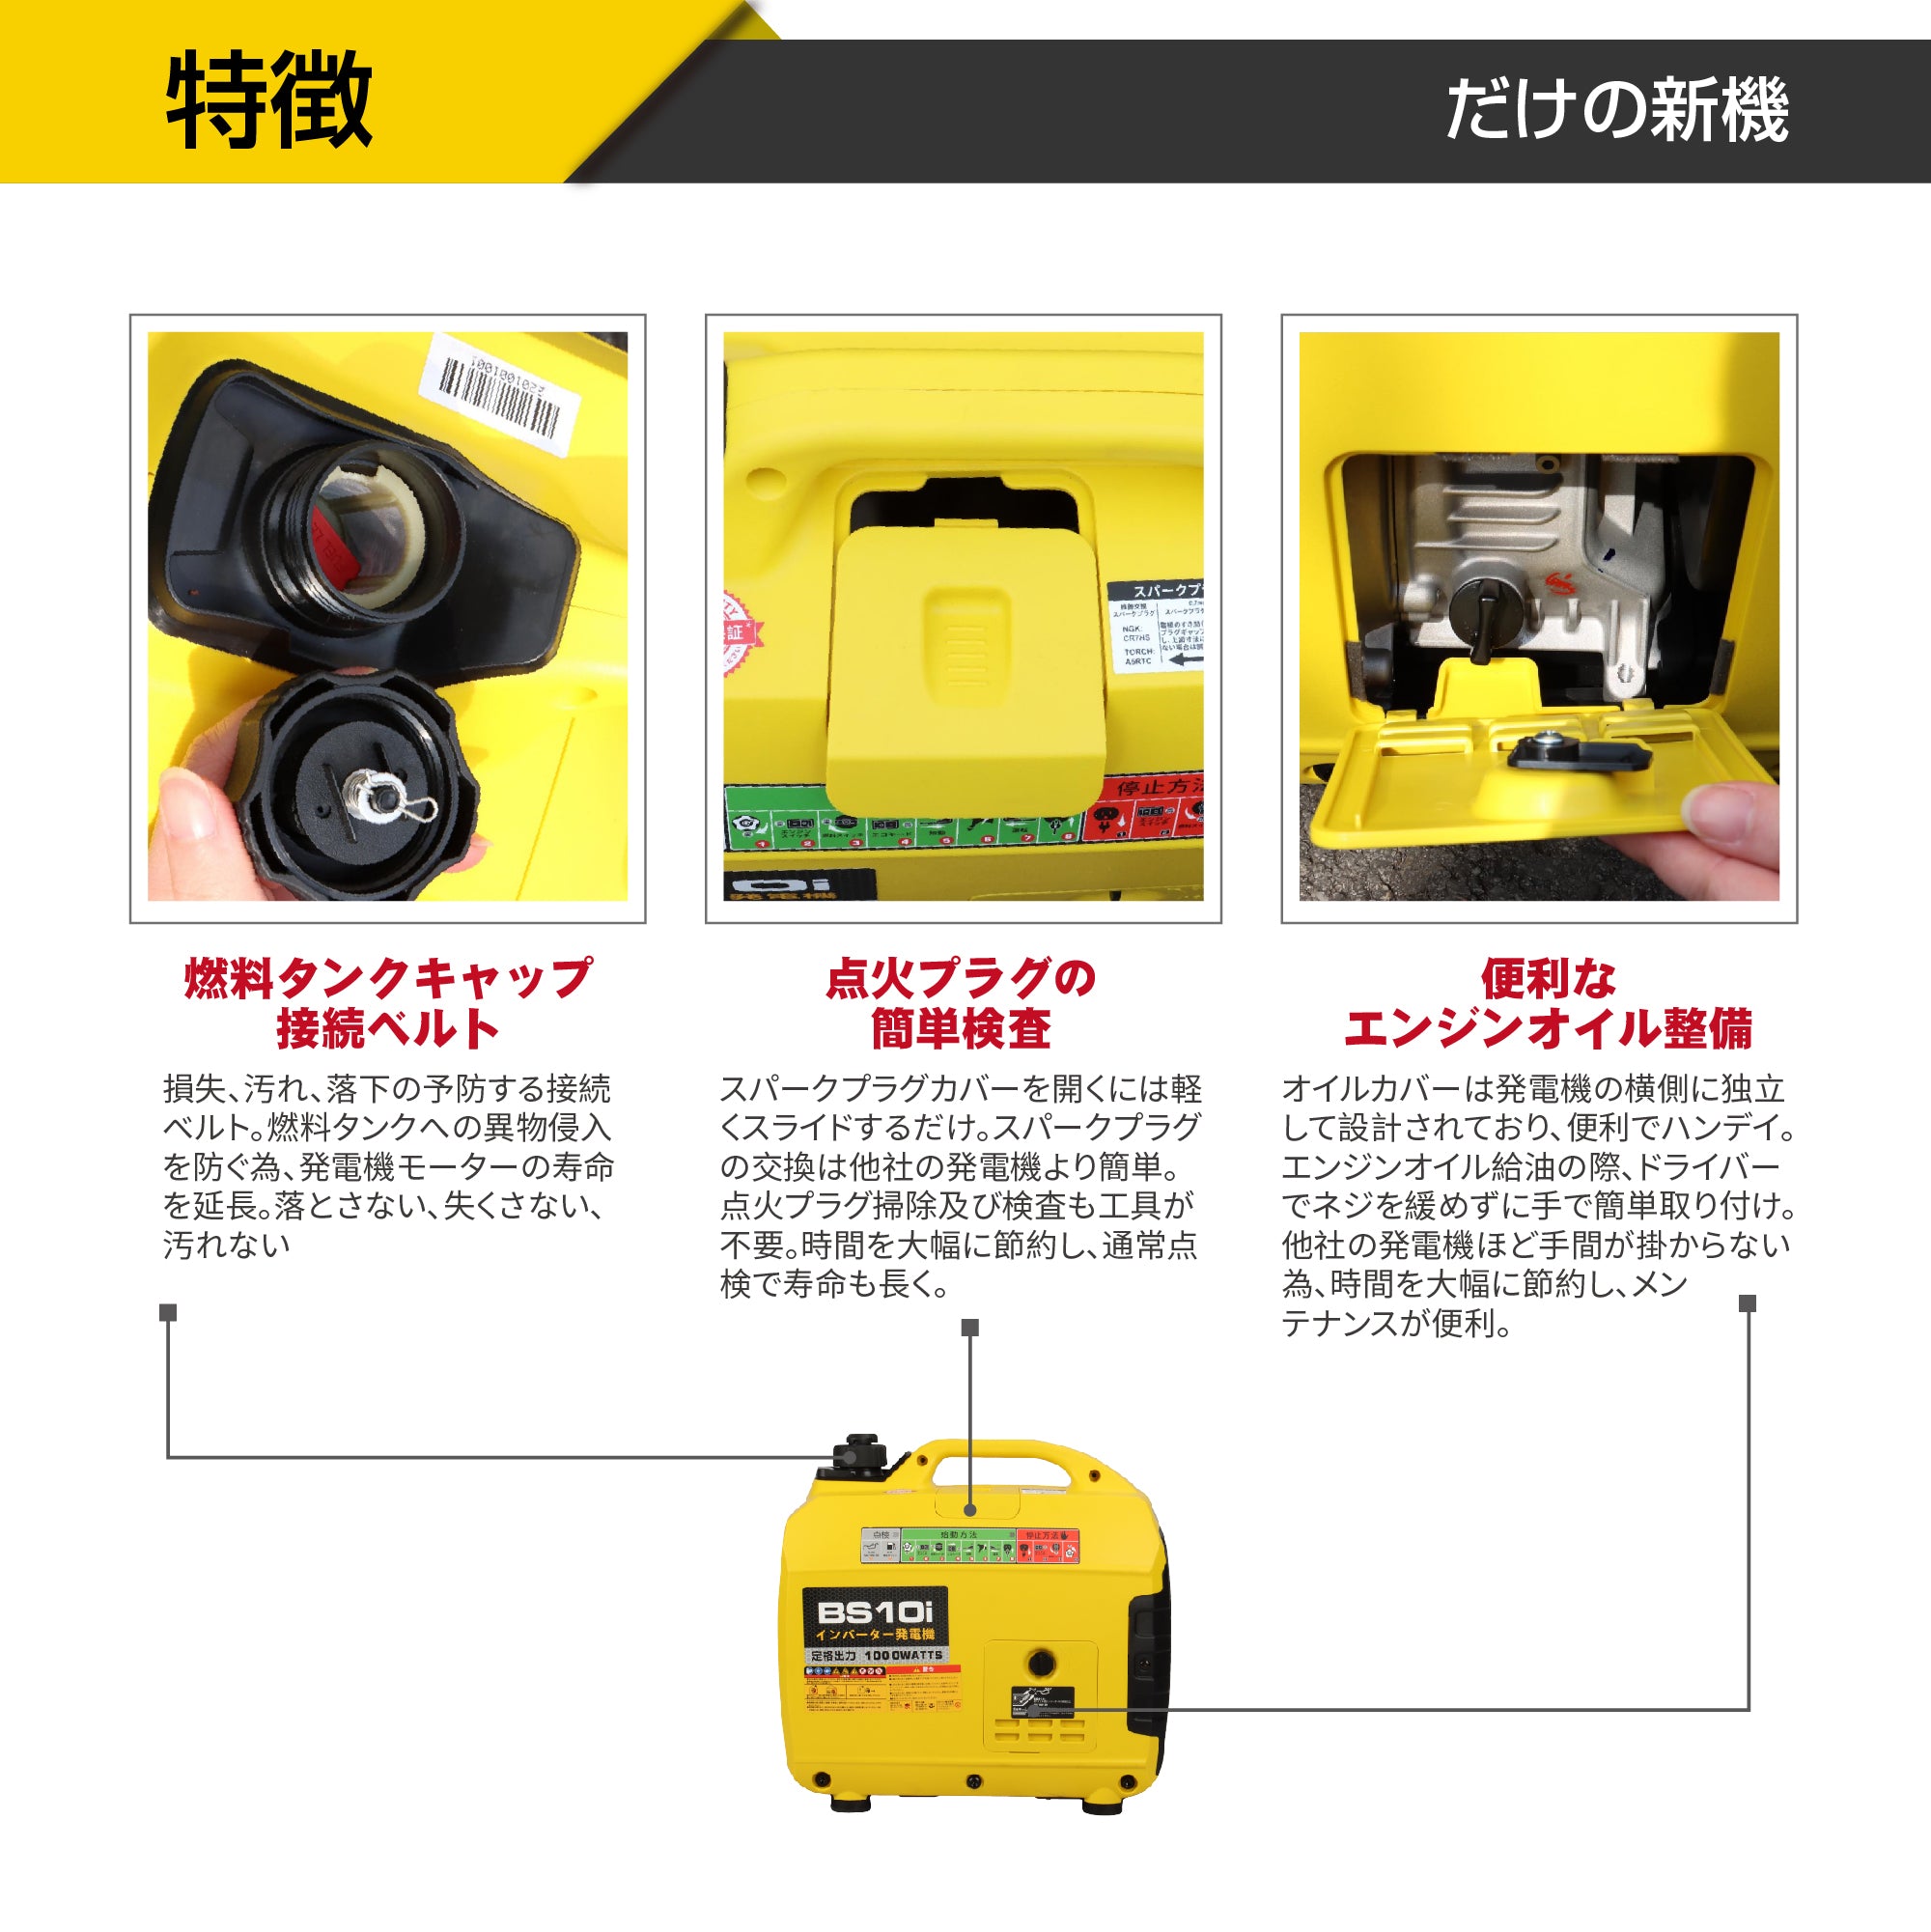 YUKATO BS10i インバーター発電機 1000W – YUKATOジャパン公式サイト